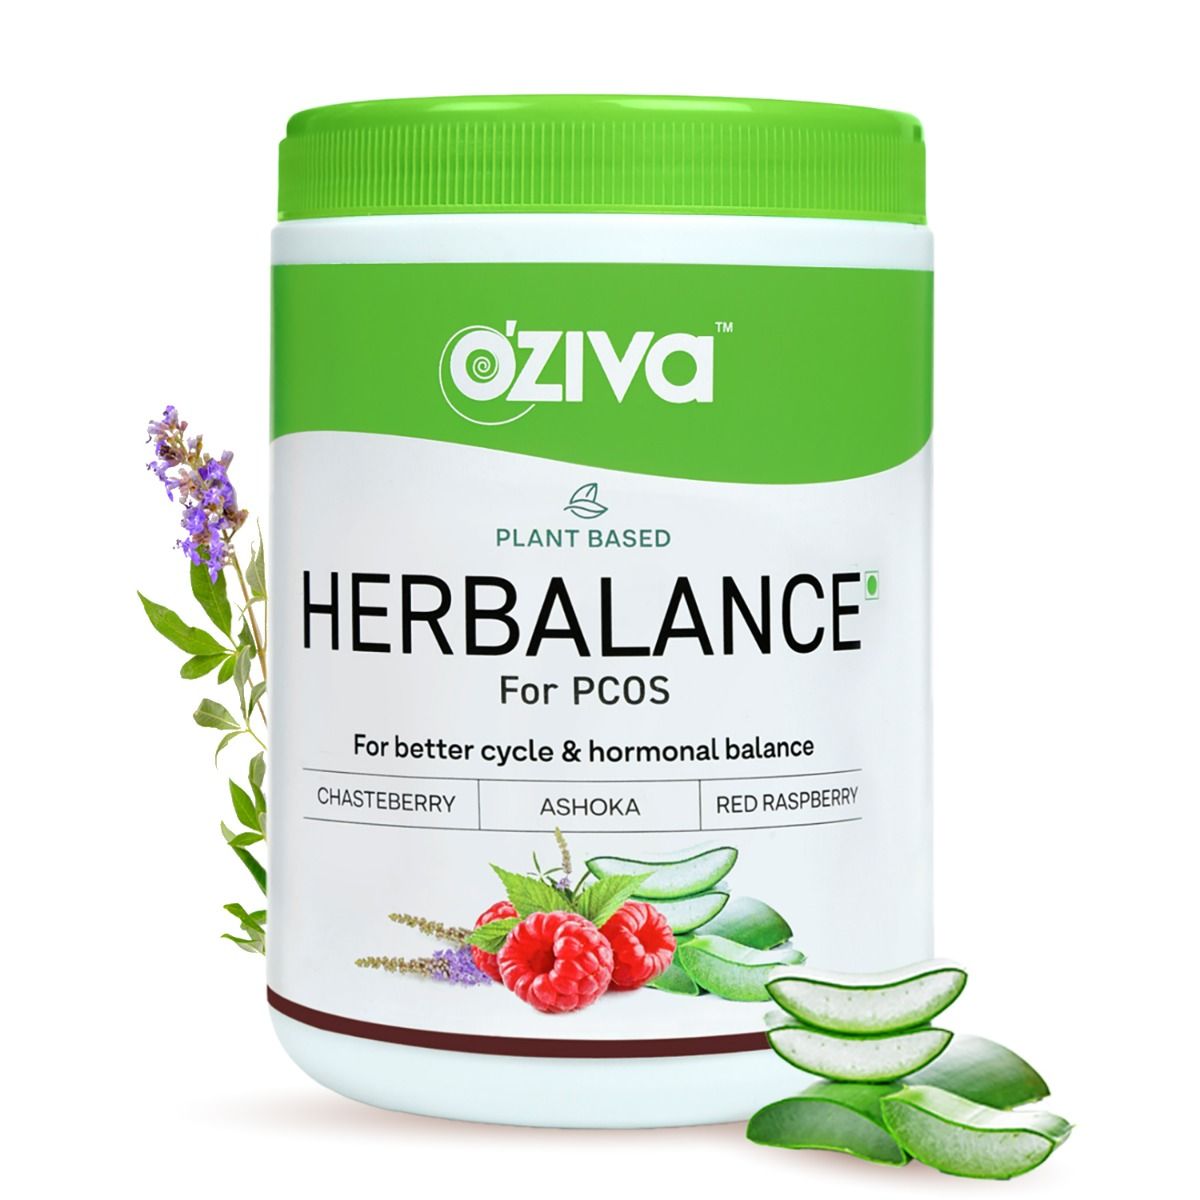 Buy Oziva Plant Based Herbalance Powder for PCOS, 250 gm Online